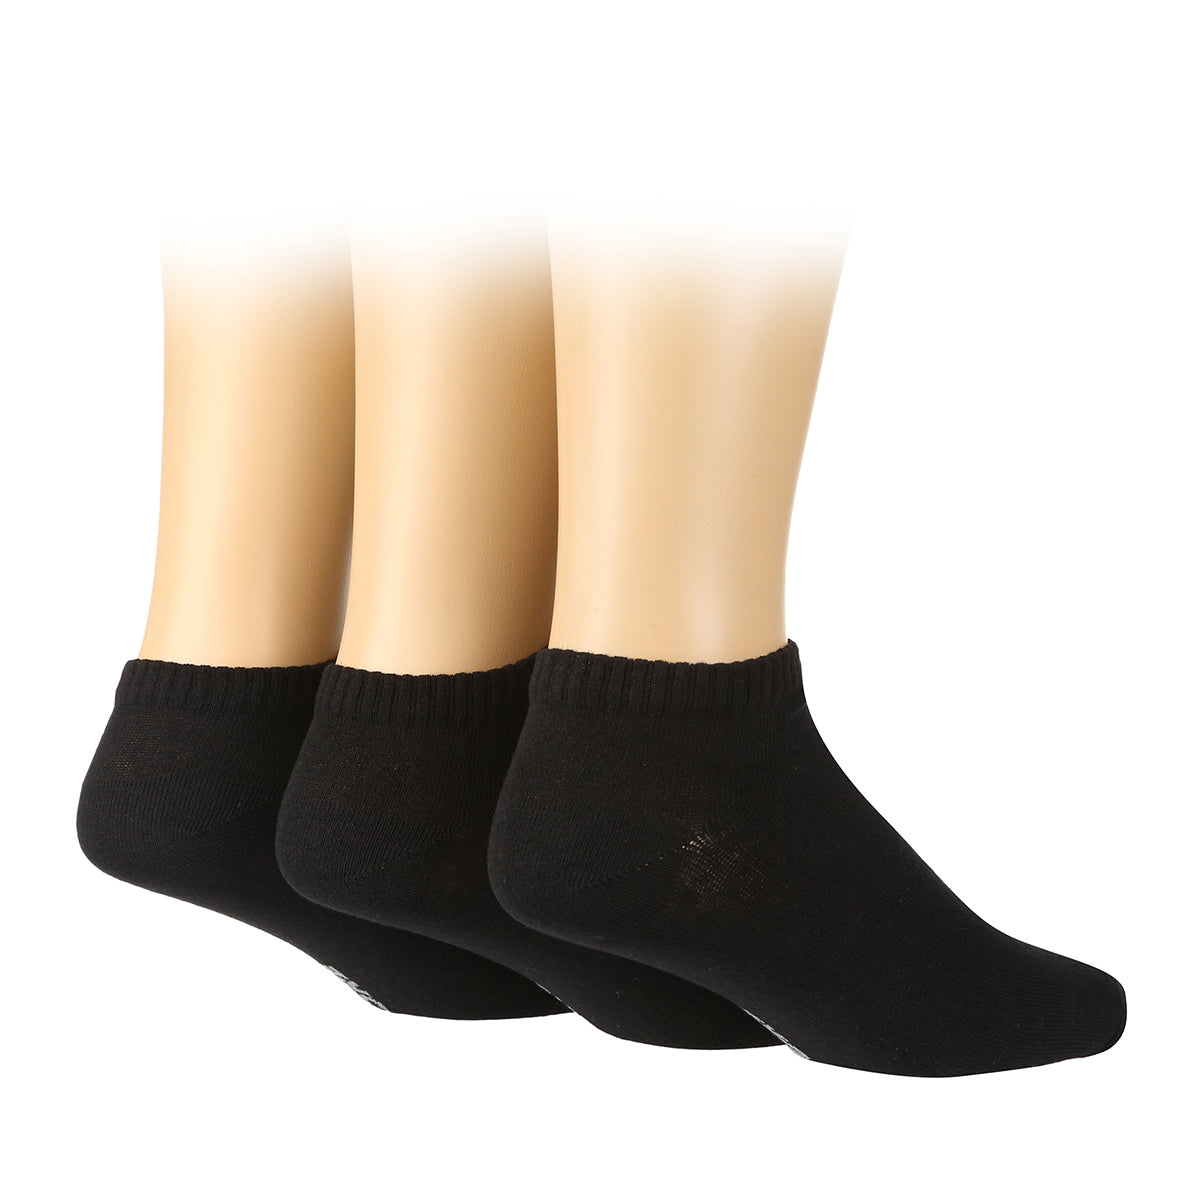 Men's Plain Trainer Sports Socks - 3 Pairs